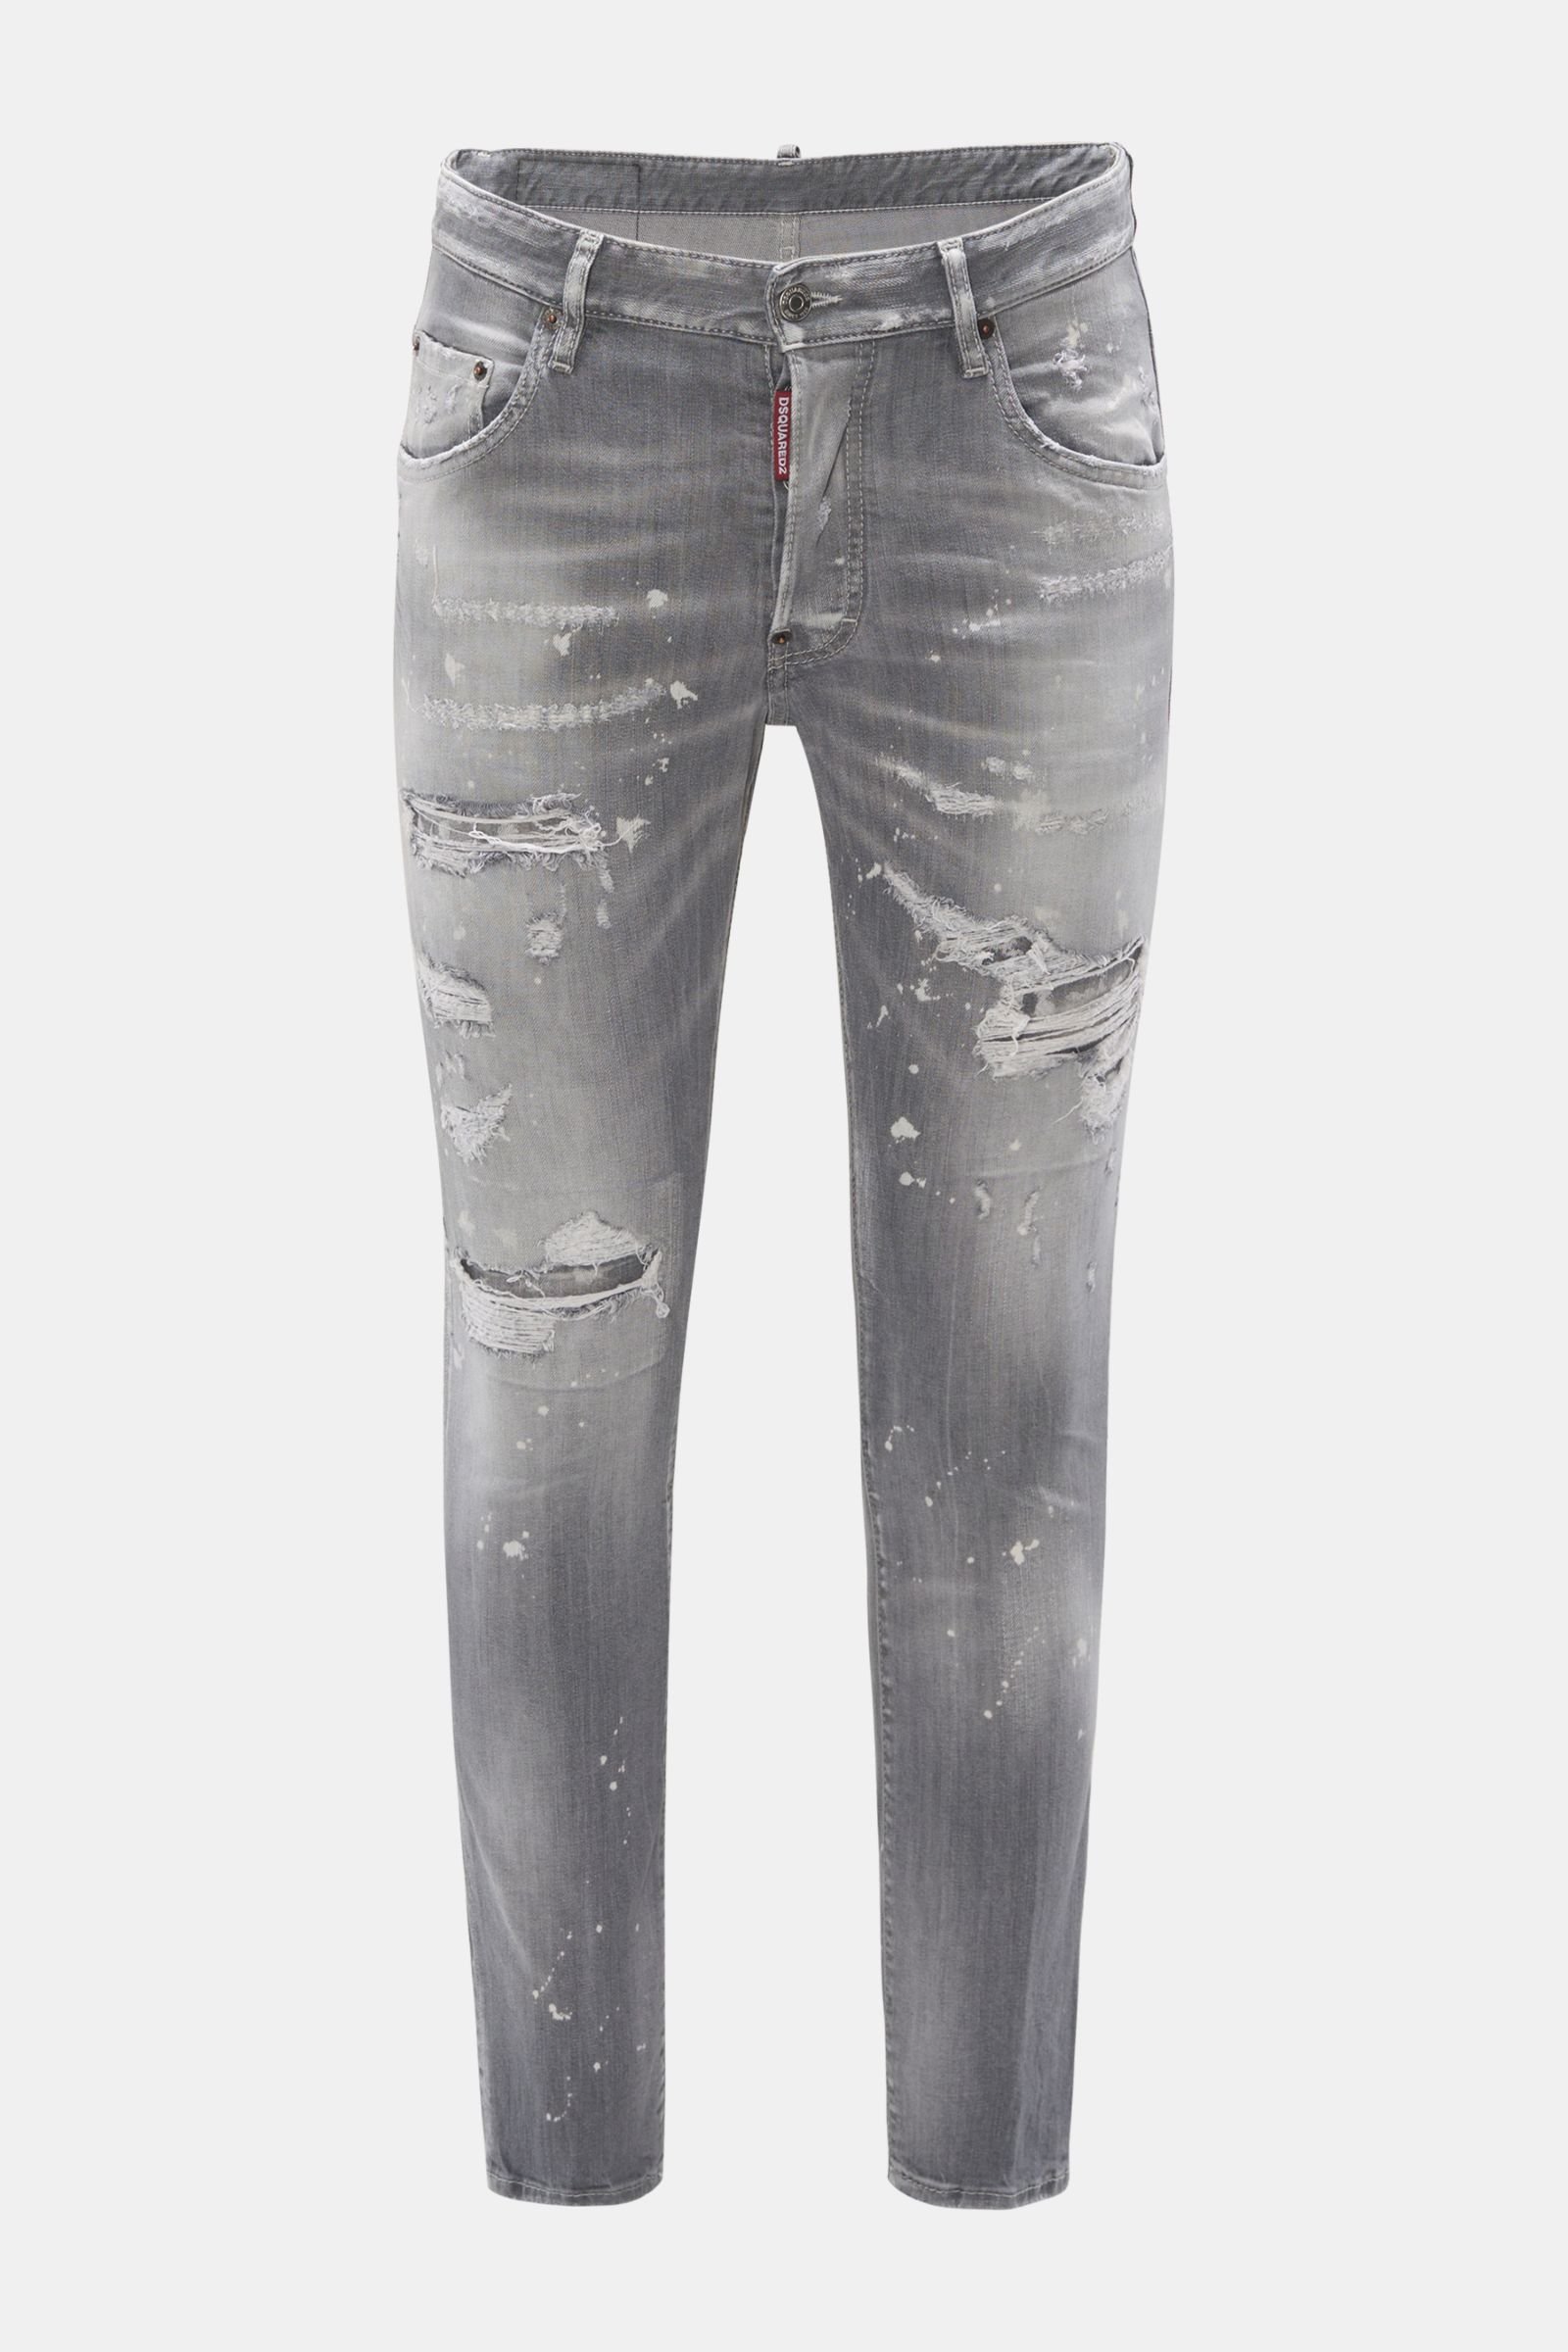 DSQUARED2 jeans 'Skater Jeans' grey | BRAUN Hamburg